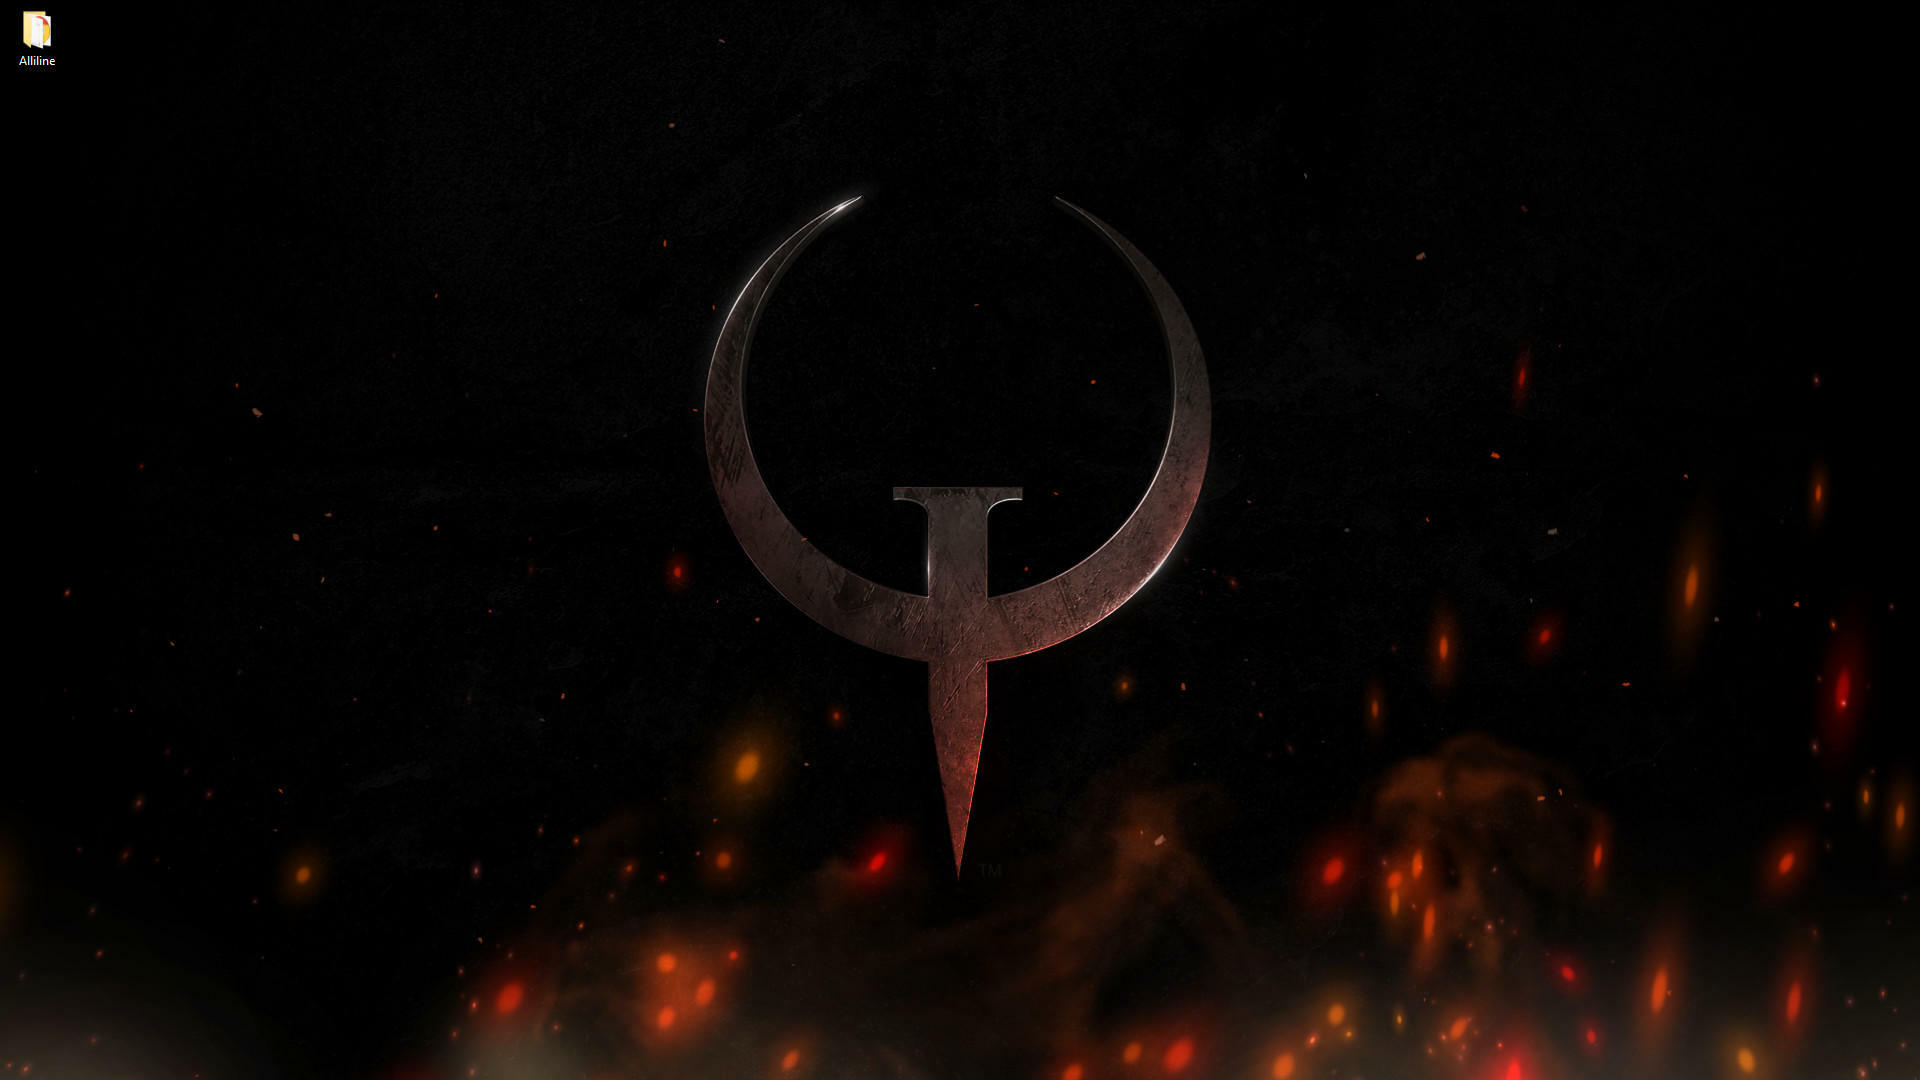 Quake Champions live wallpaper [DOWNLOAD FREE]